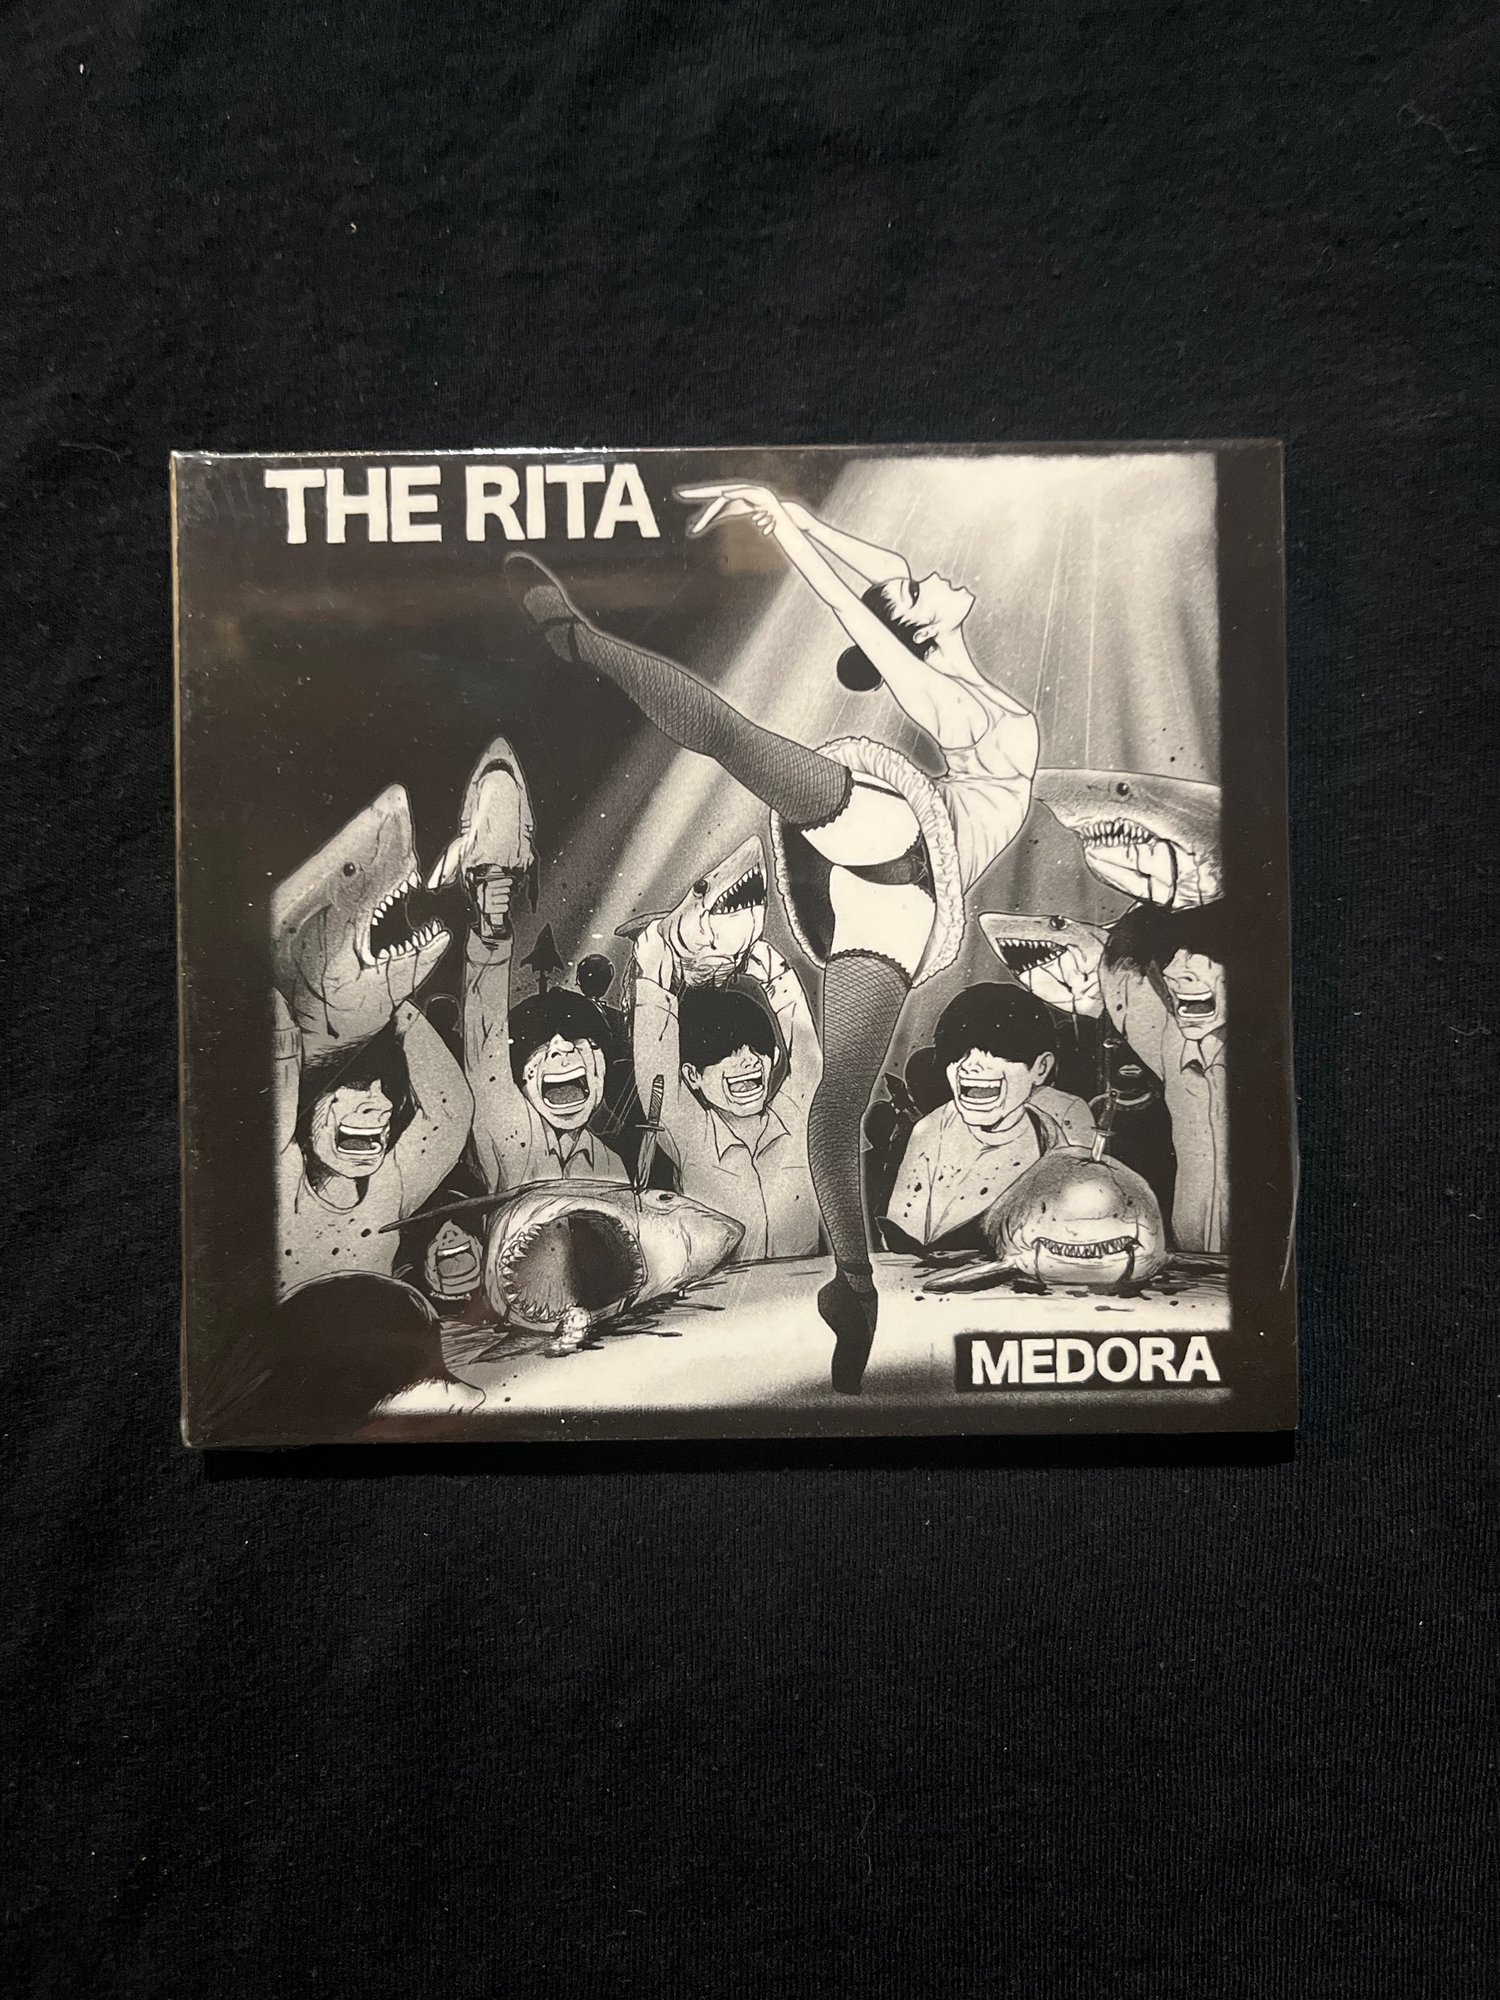 The Rita - Medora CD (OEC)